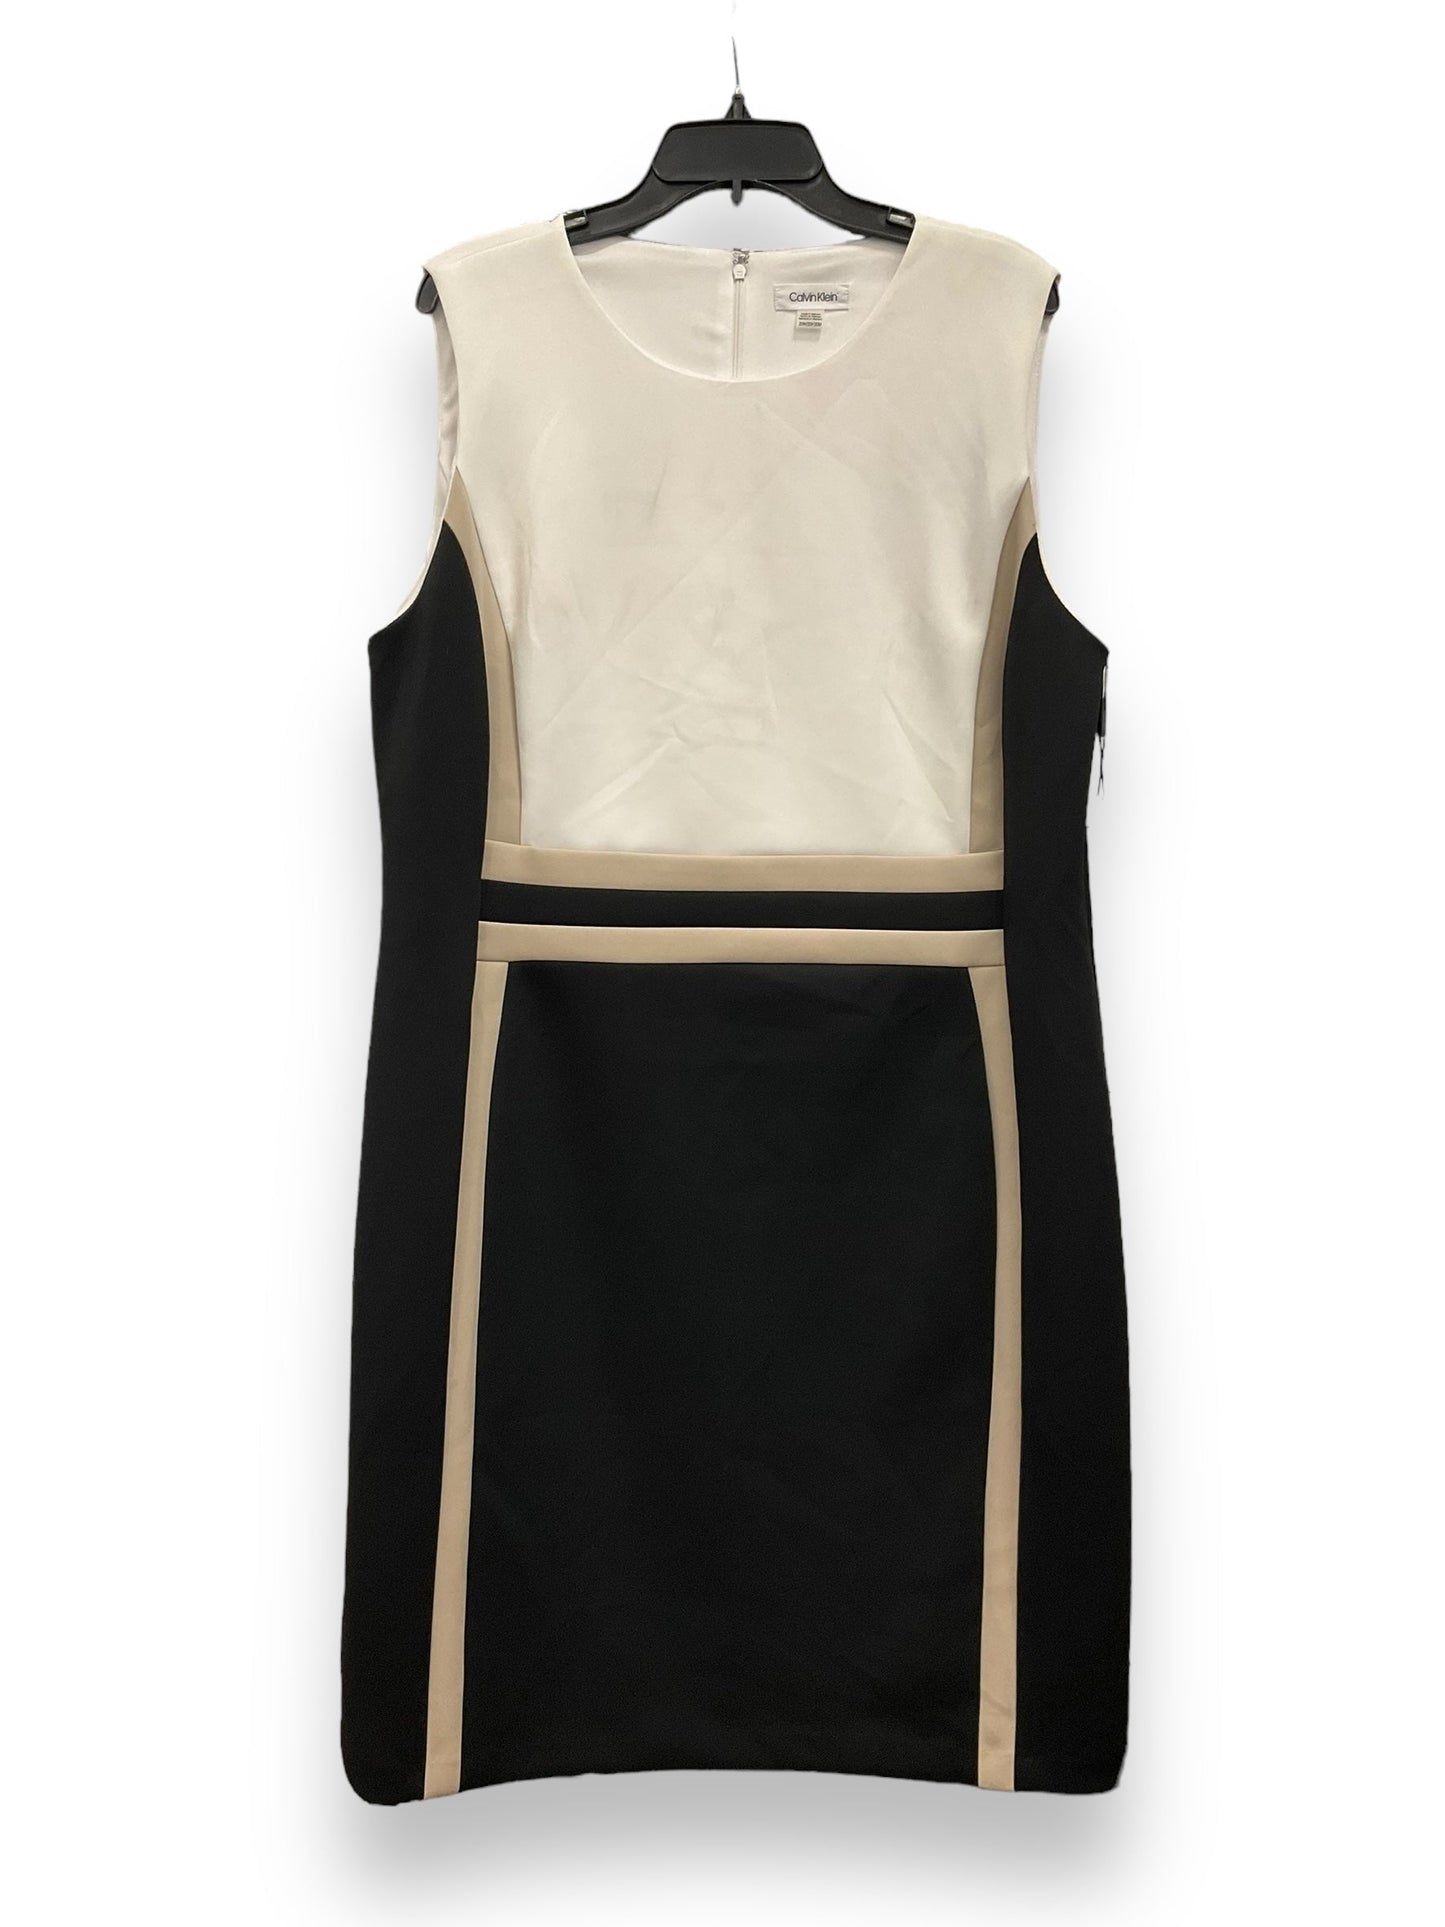 Multi-colored Dress Casual Short Calvin Klein, Size 2x